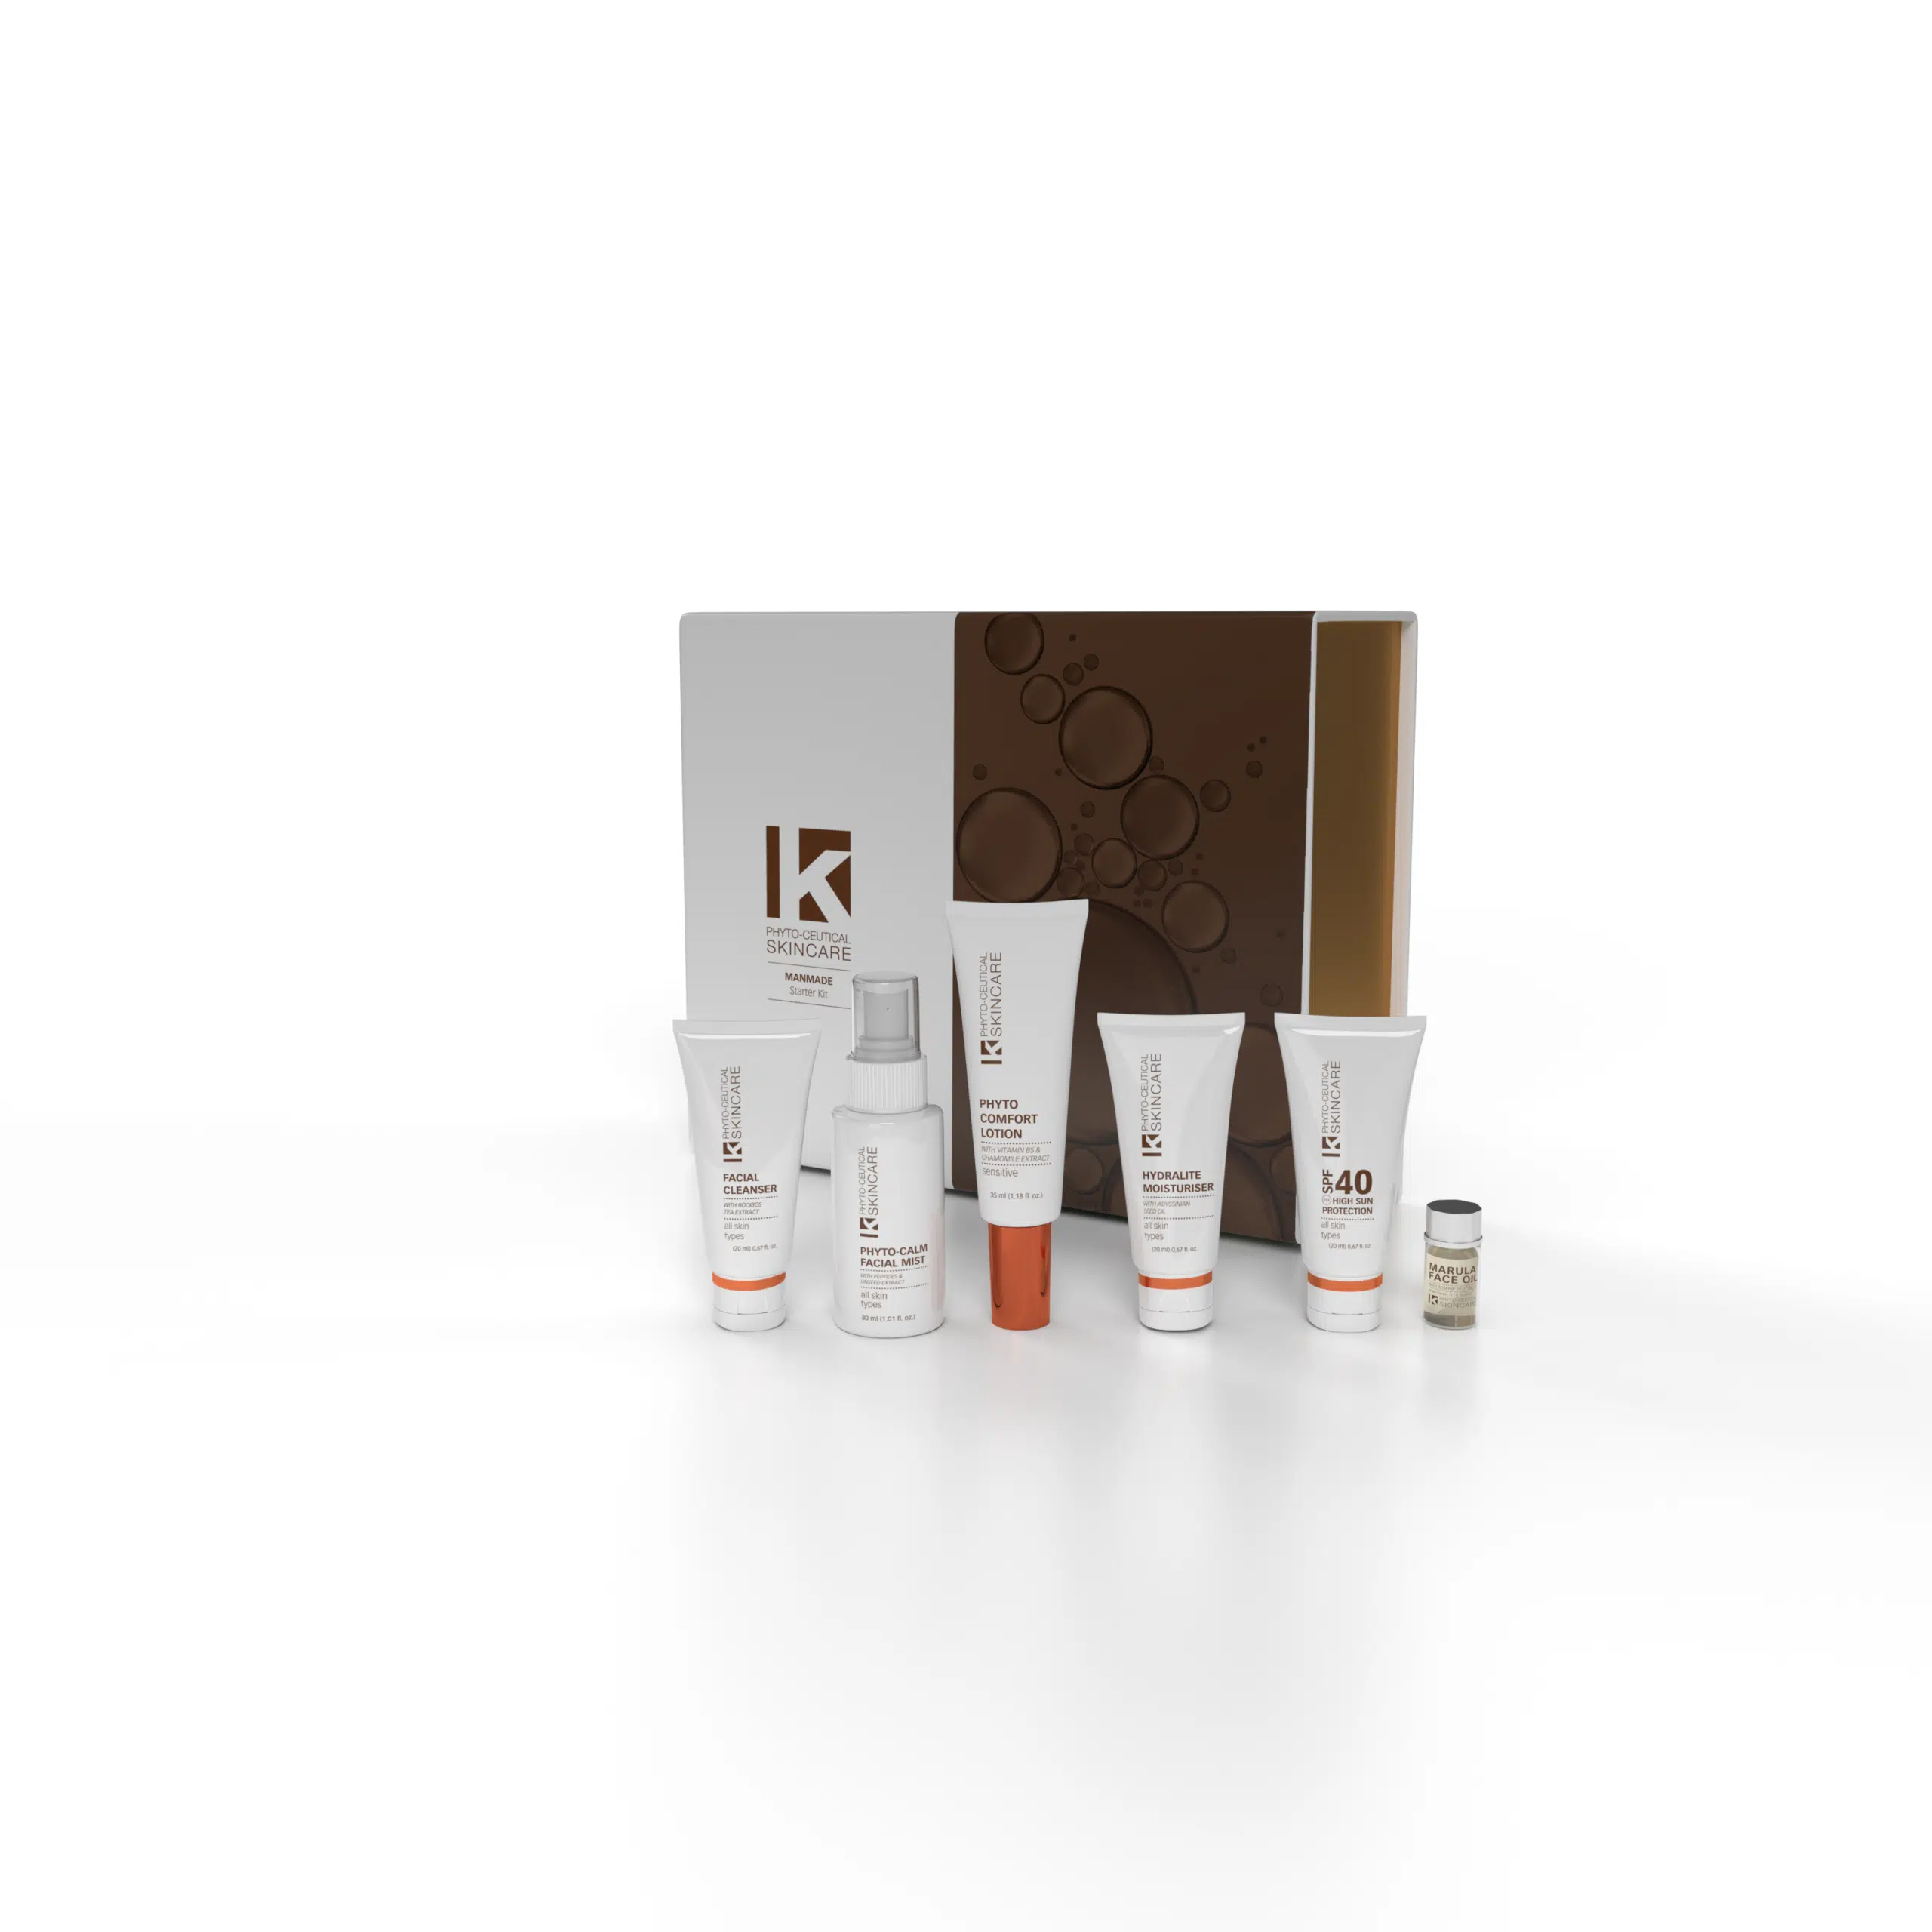 K Phyto-Ceutical Skincare - Manmade Kit